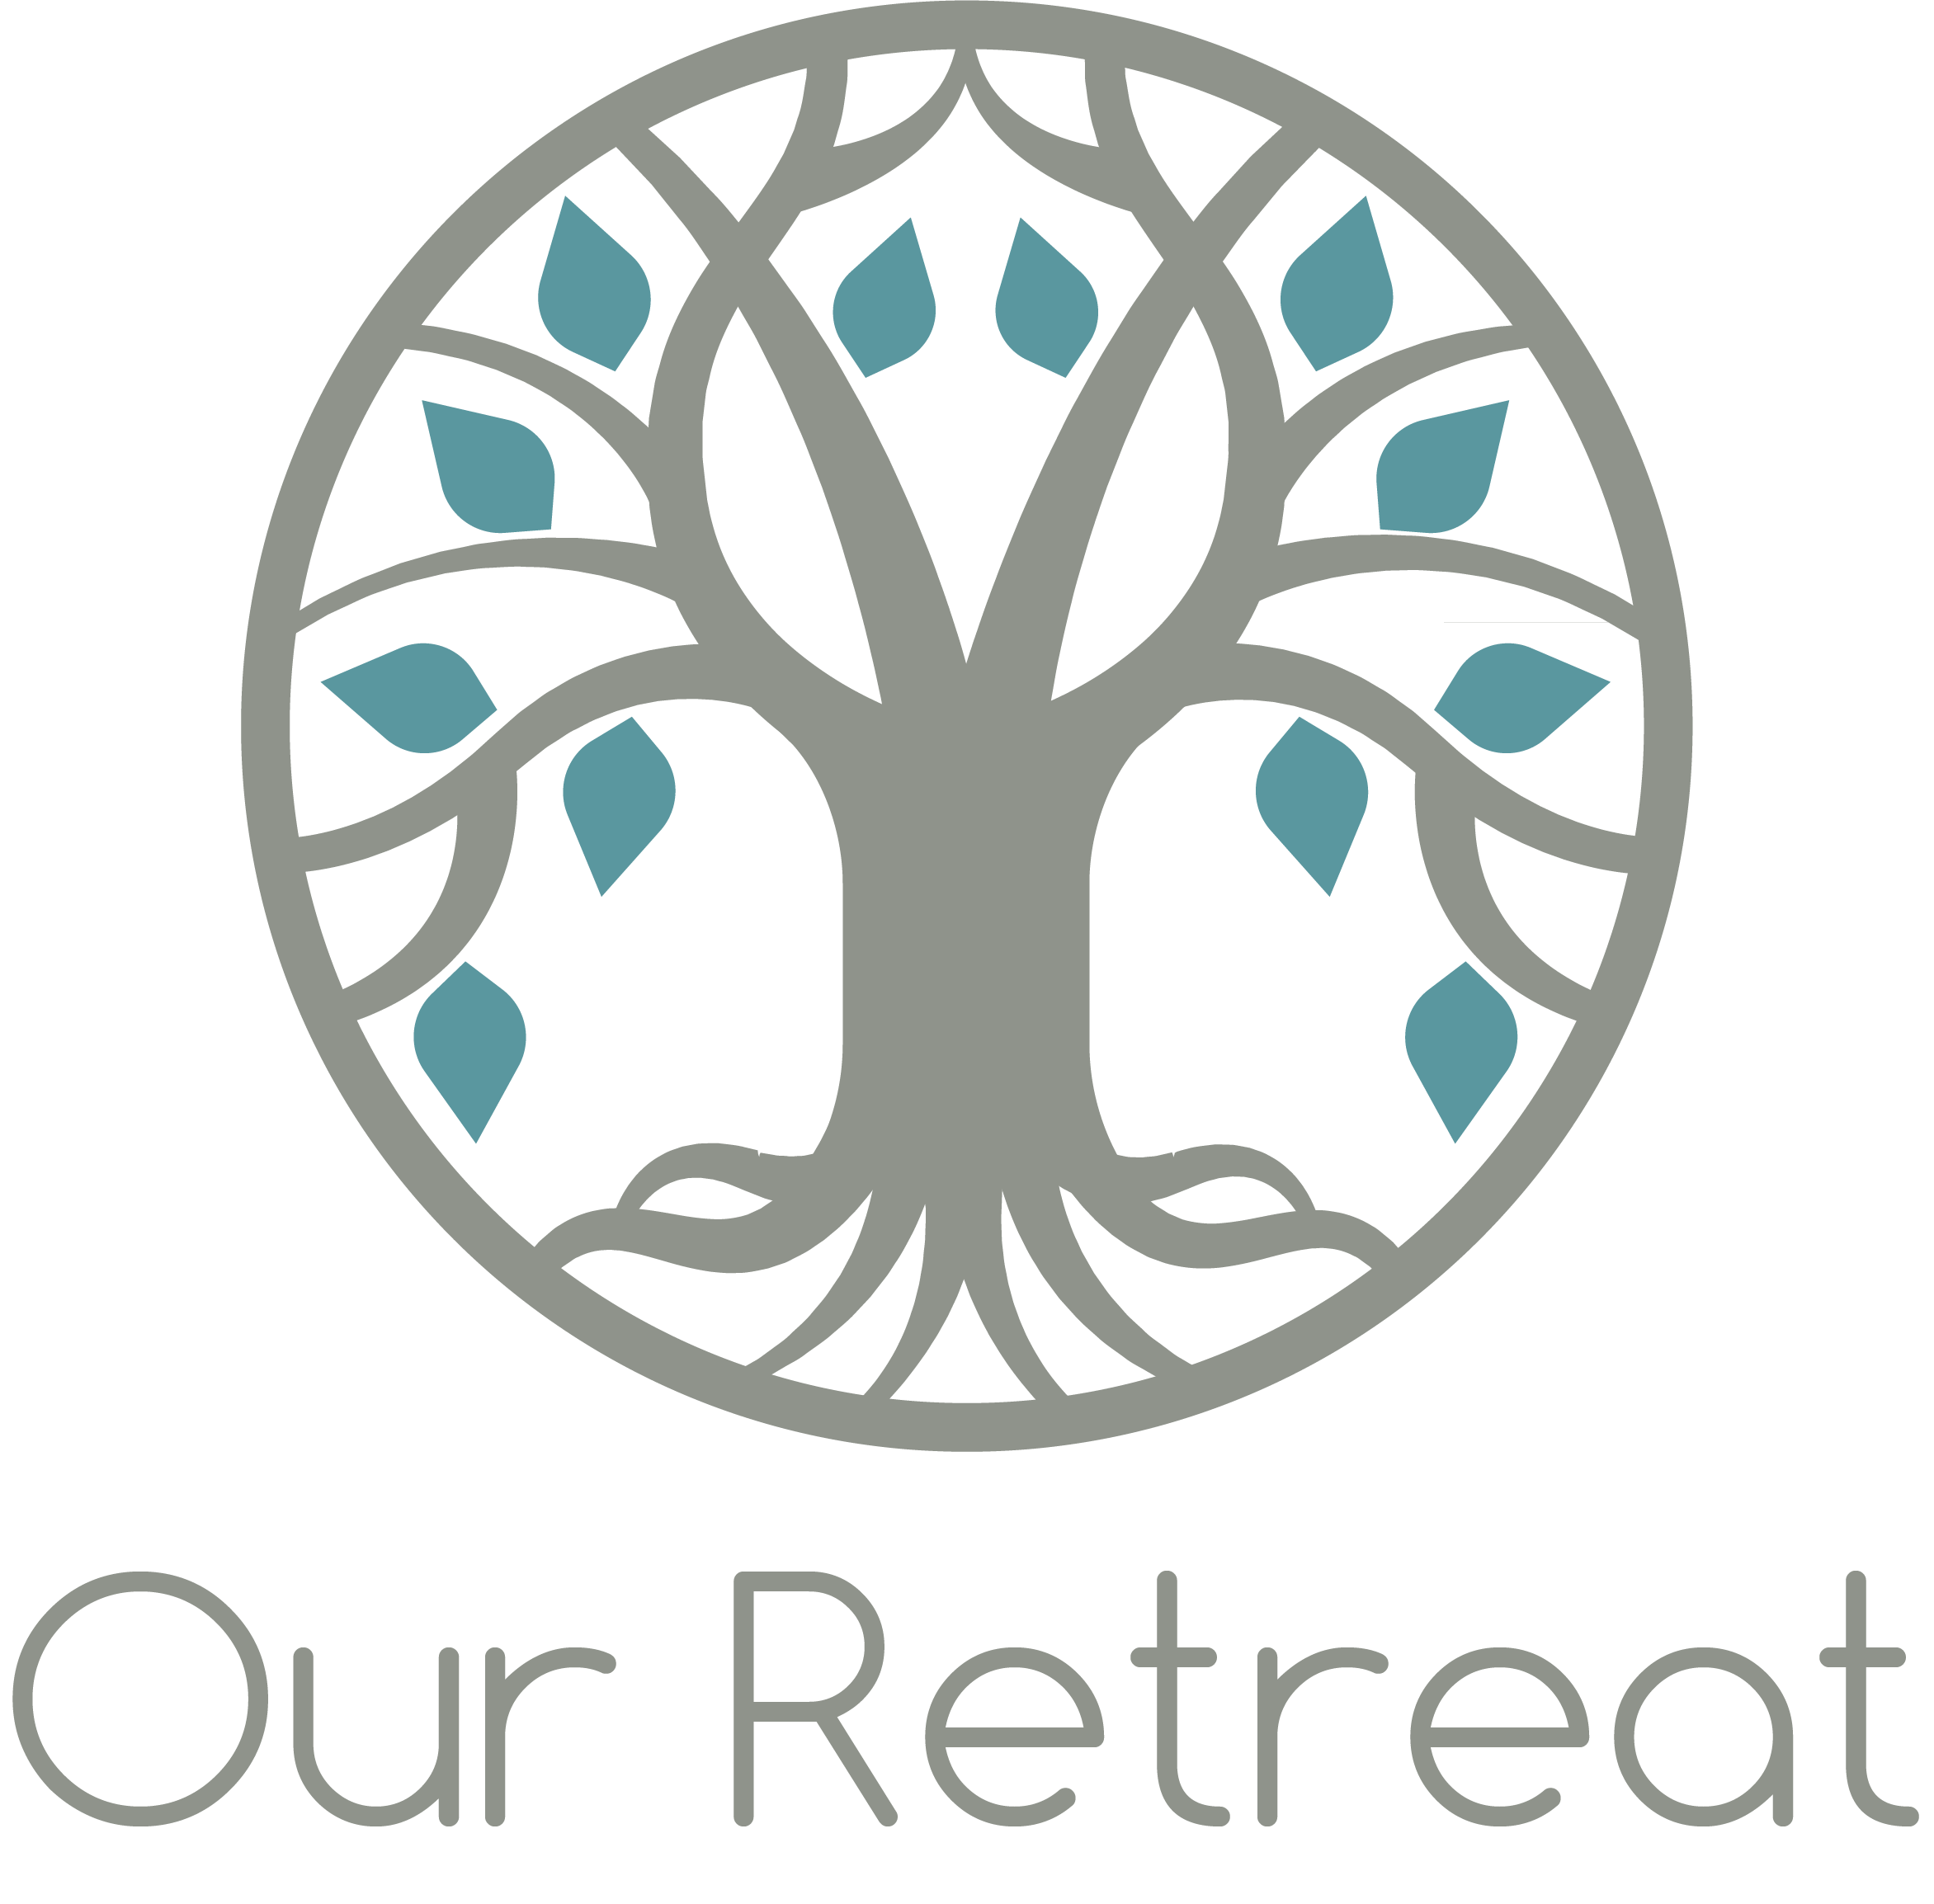 Retreat Logo